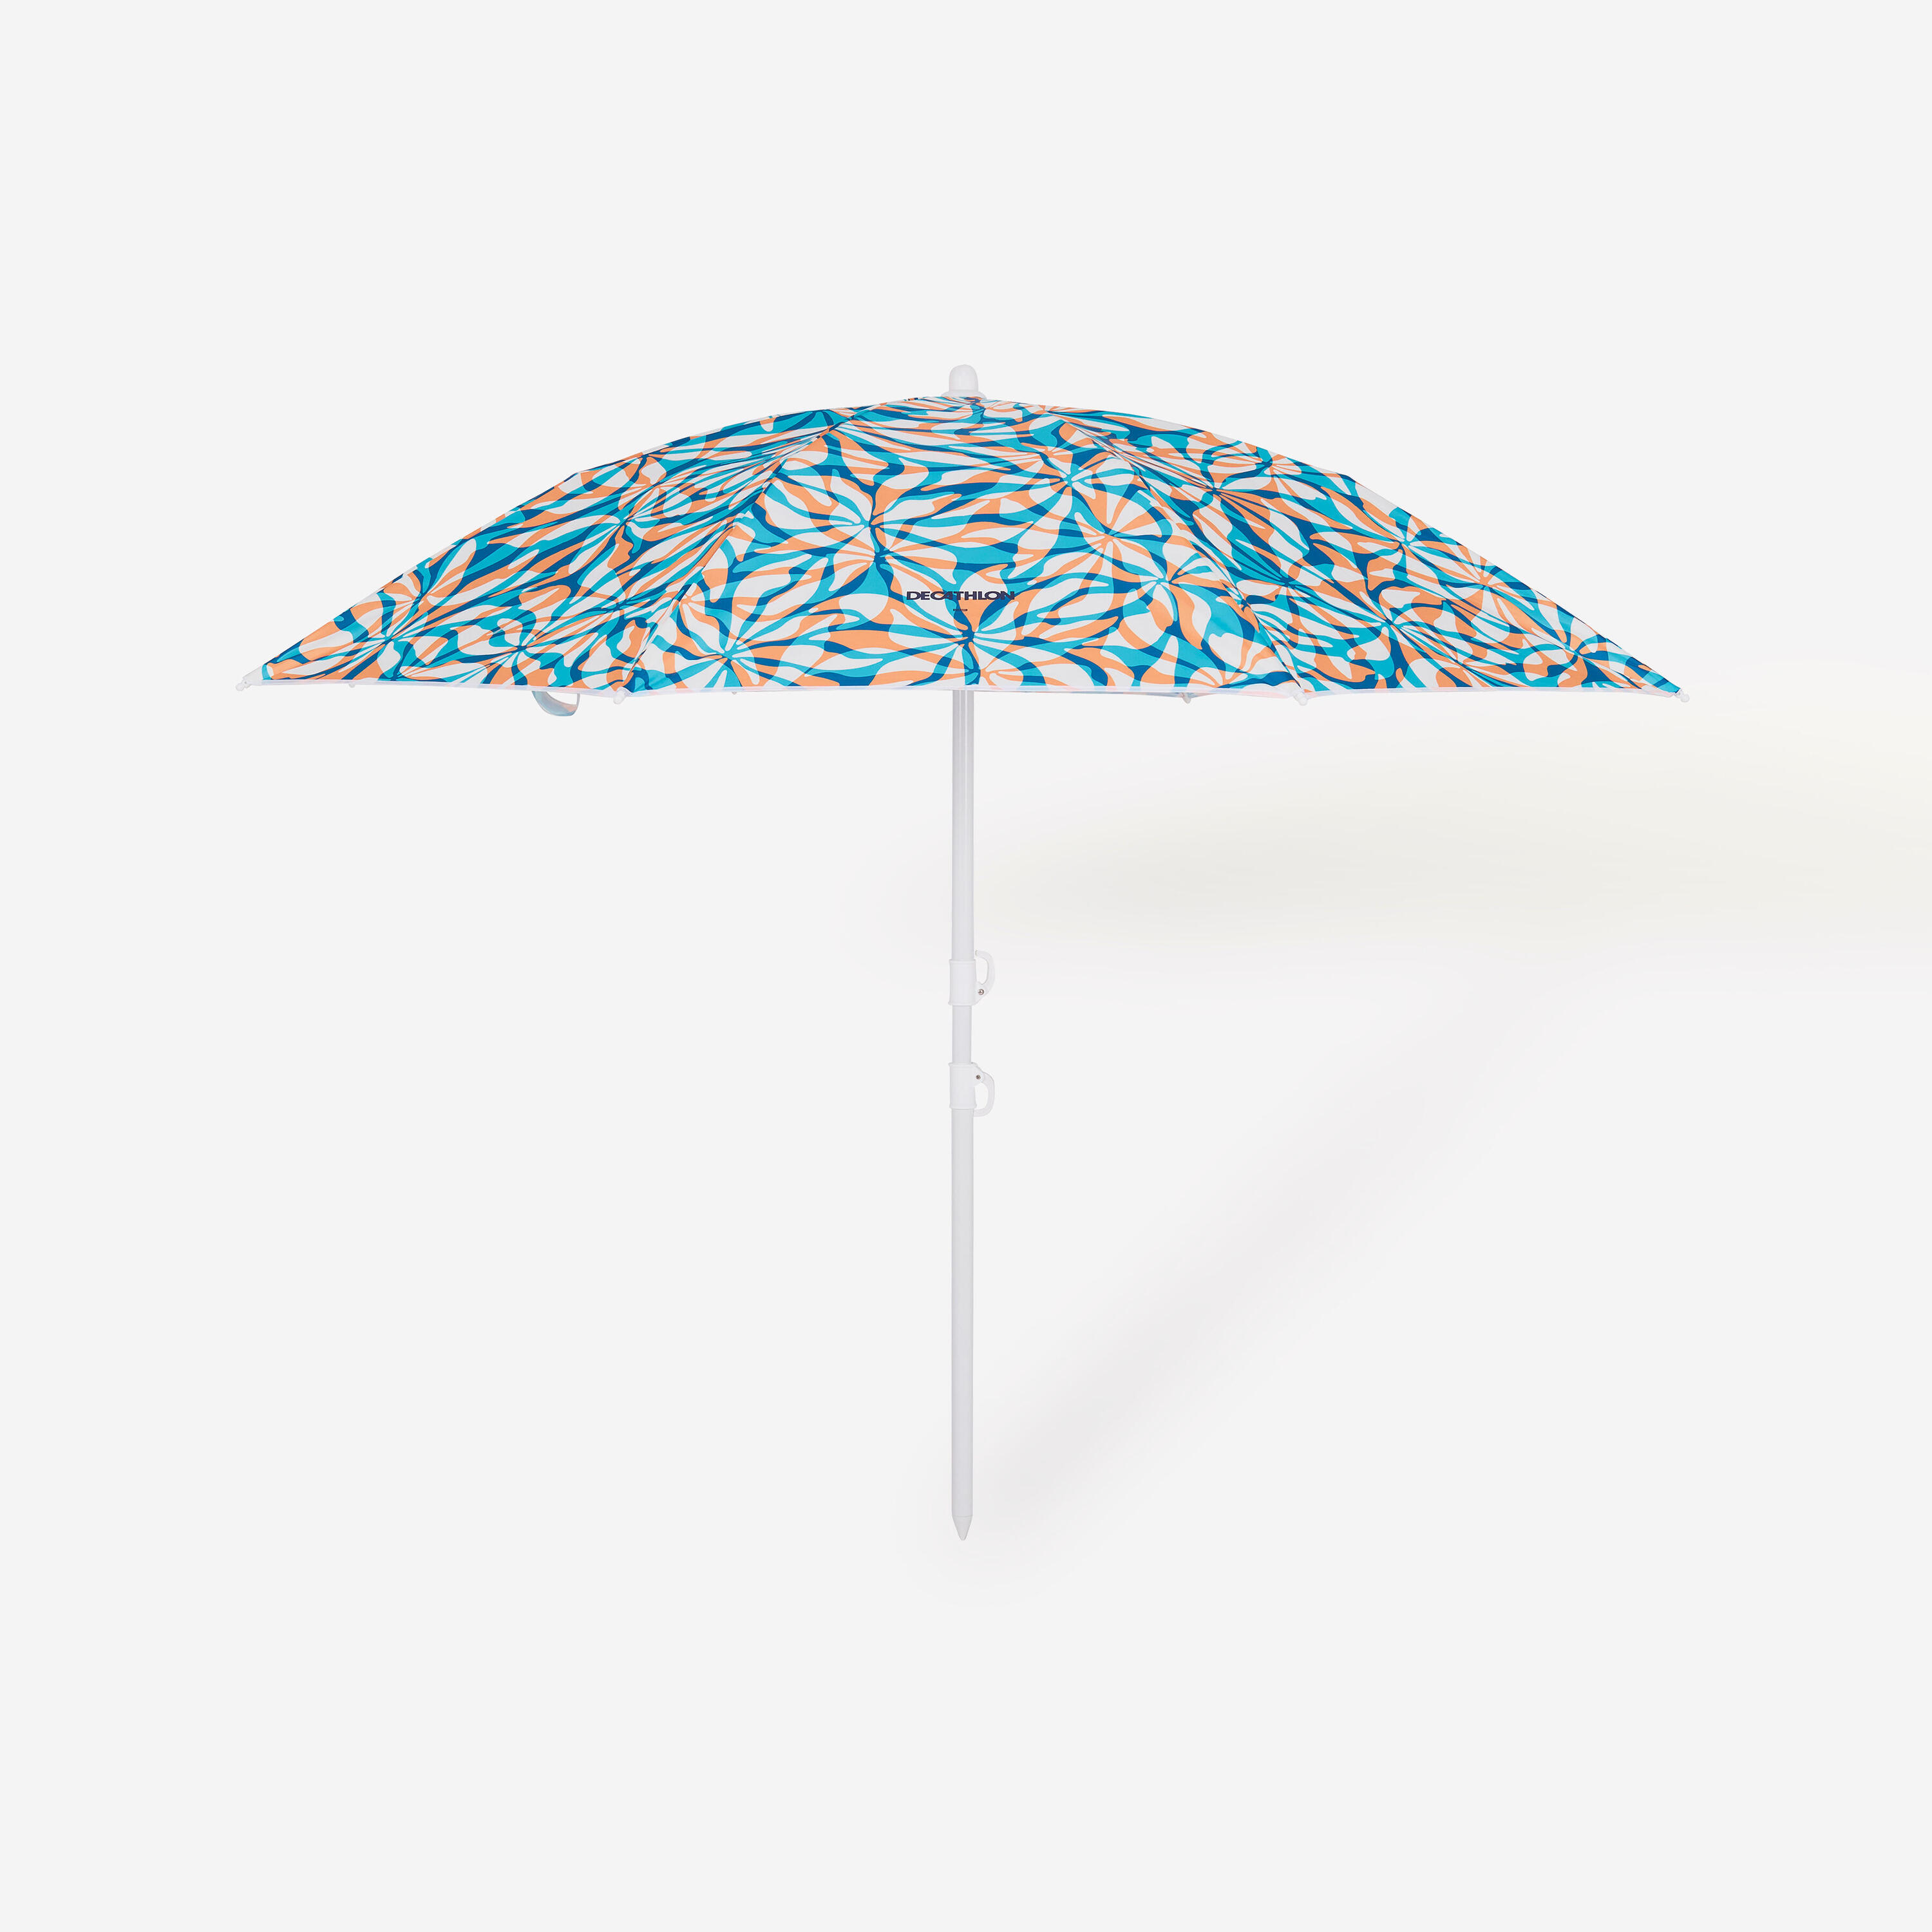 Compact beach umbrella 2 person UPF 50+ - Paruv 160 blue flowers 8/8